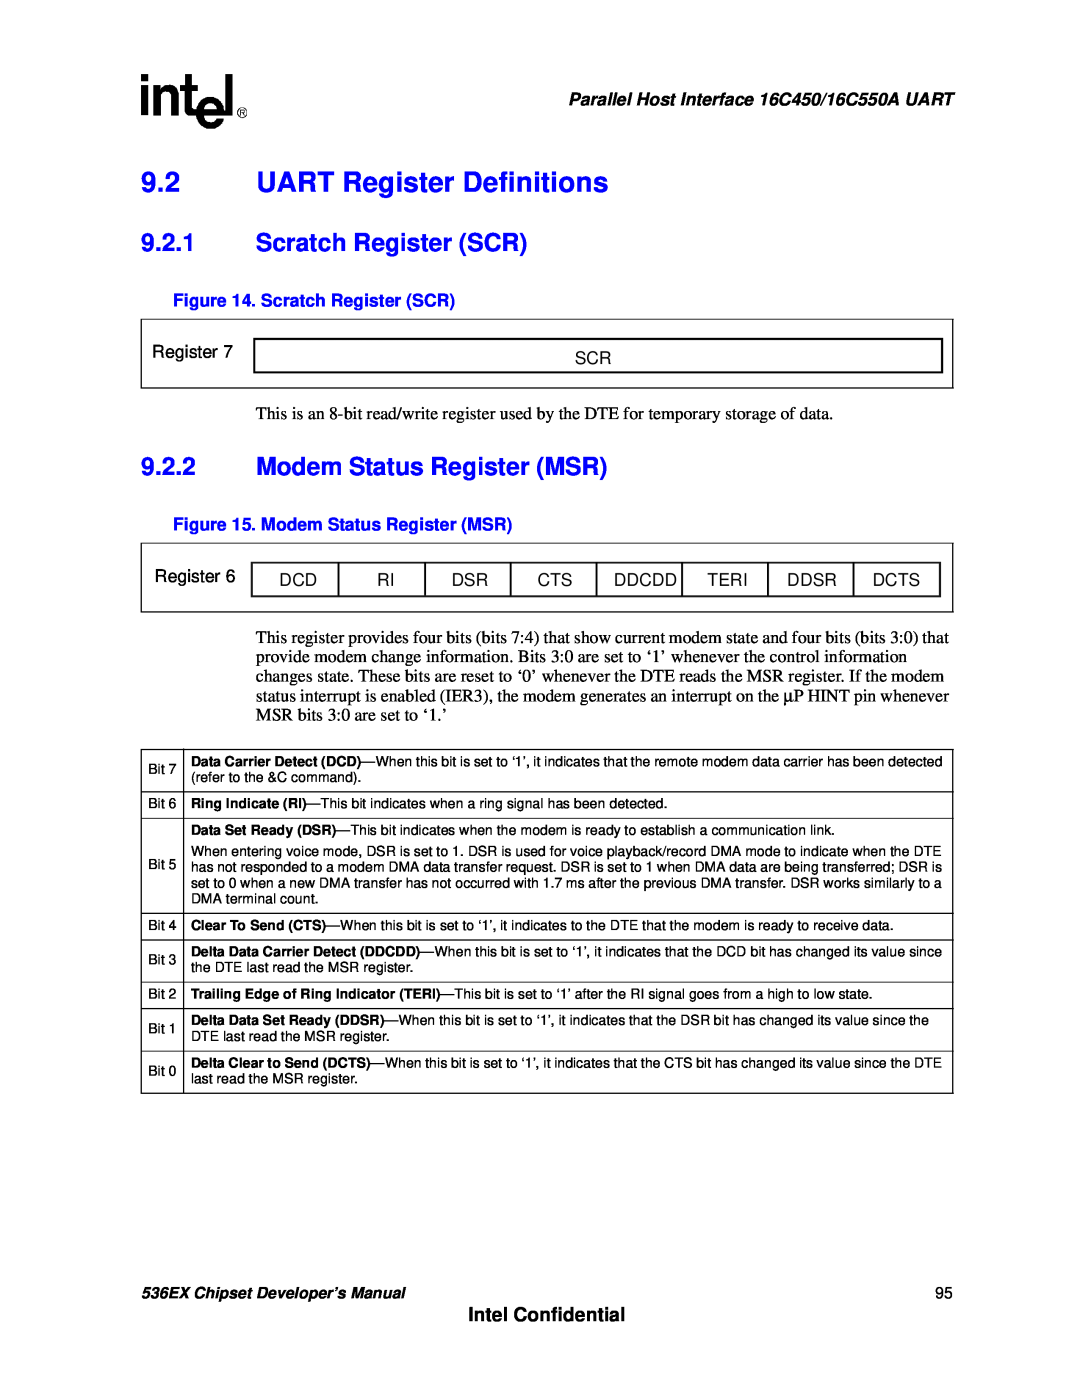 Intel 537EX manual 9.2.1Scratch Register SCR, 9.2.2Modem Status Register MSR, Intel Confidential 